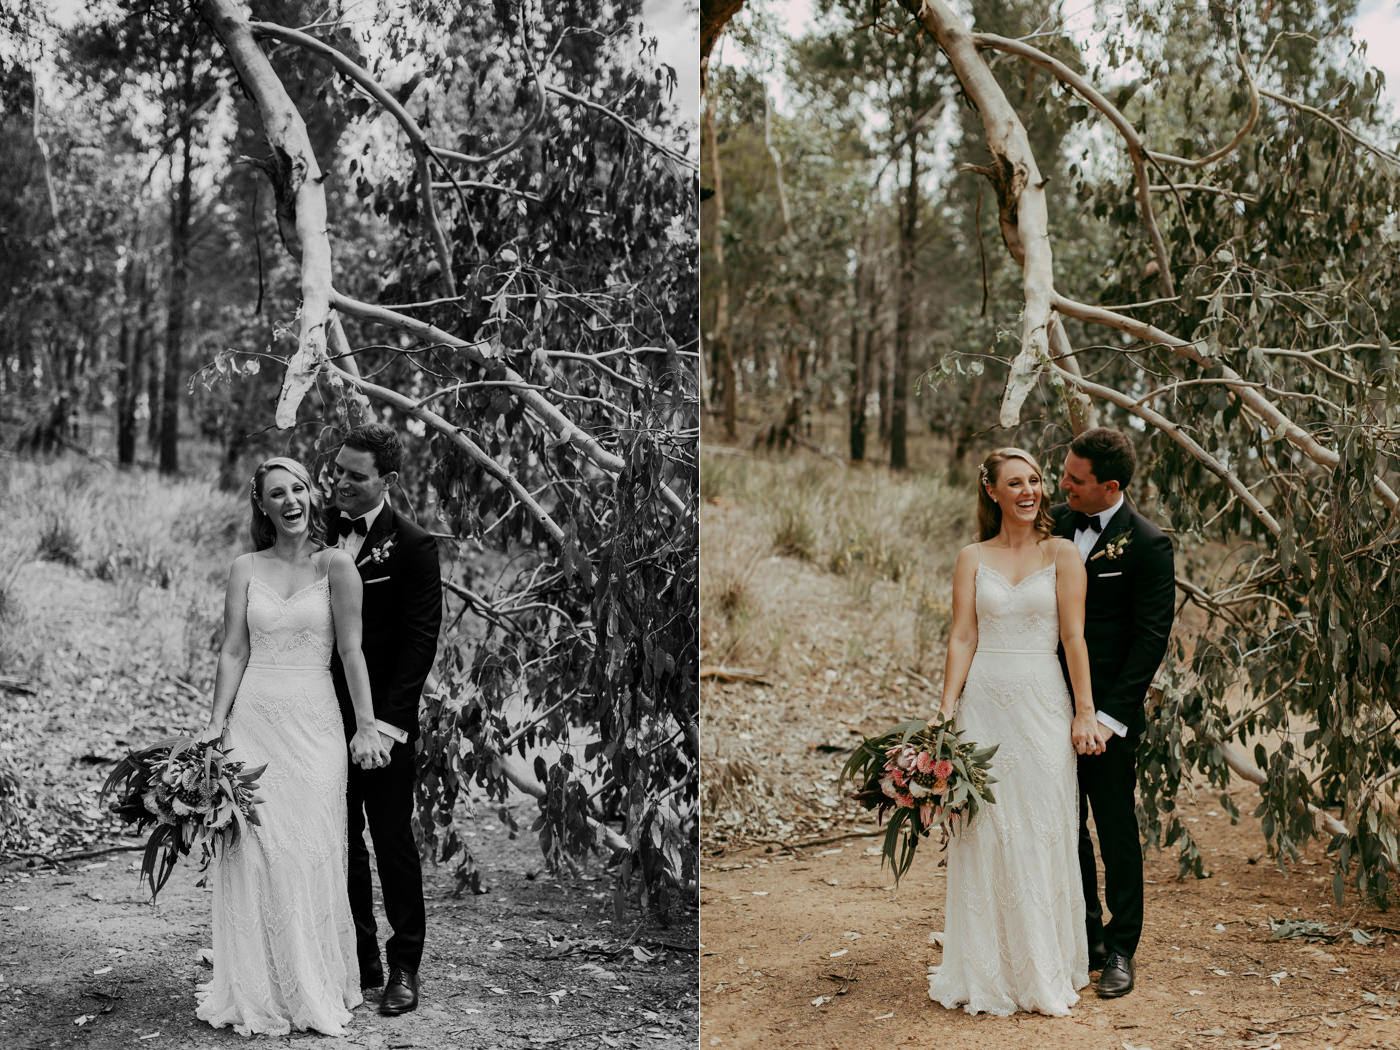 Anthony & Eliet - Wagga Wagga Wedding - Country NSW - Samantha Heather Photography-59.jpg